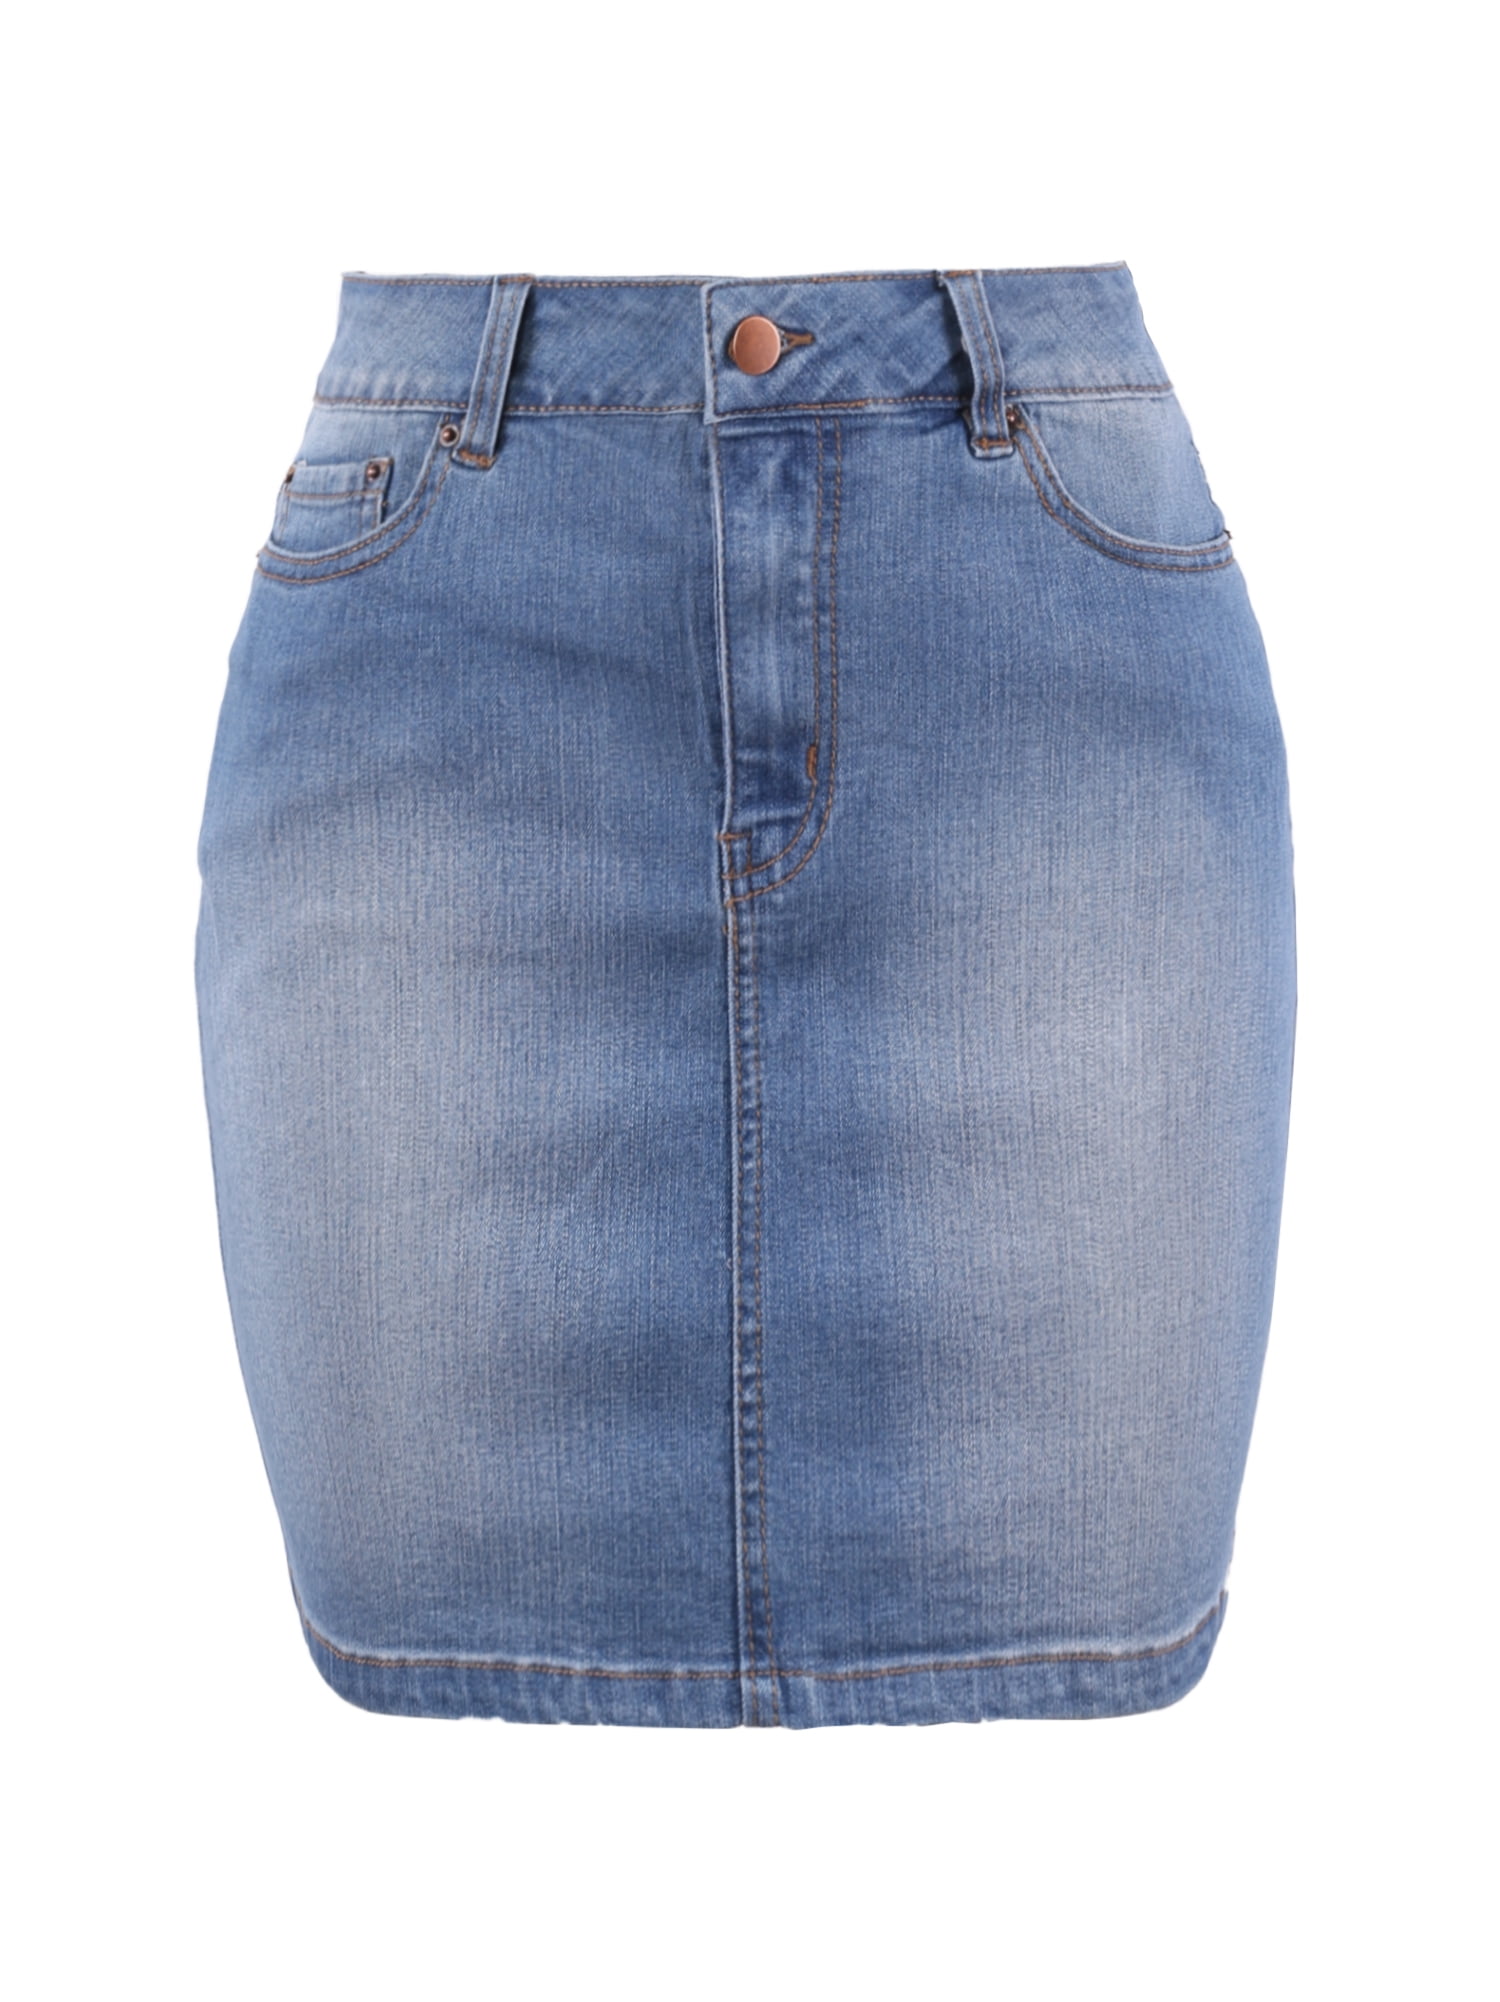 A2Y Women's Casual Rayon Denim Jean Short Mini Skirts Light Navy L ...